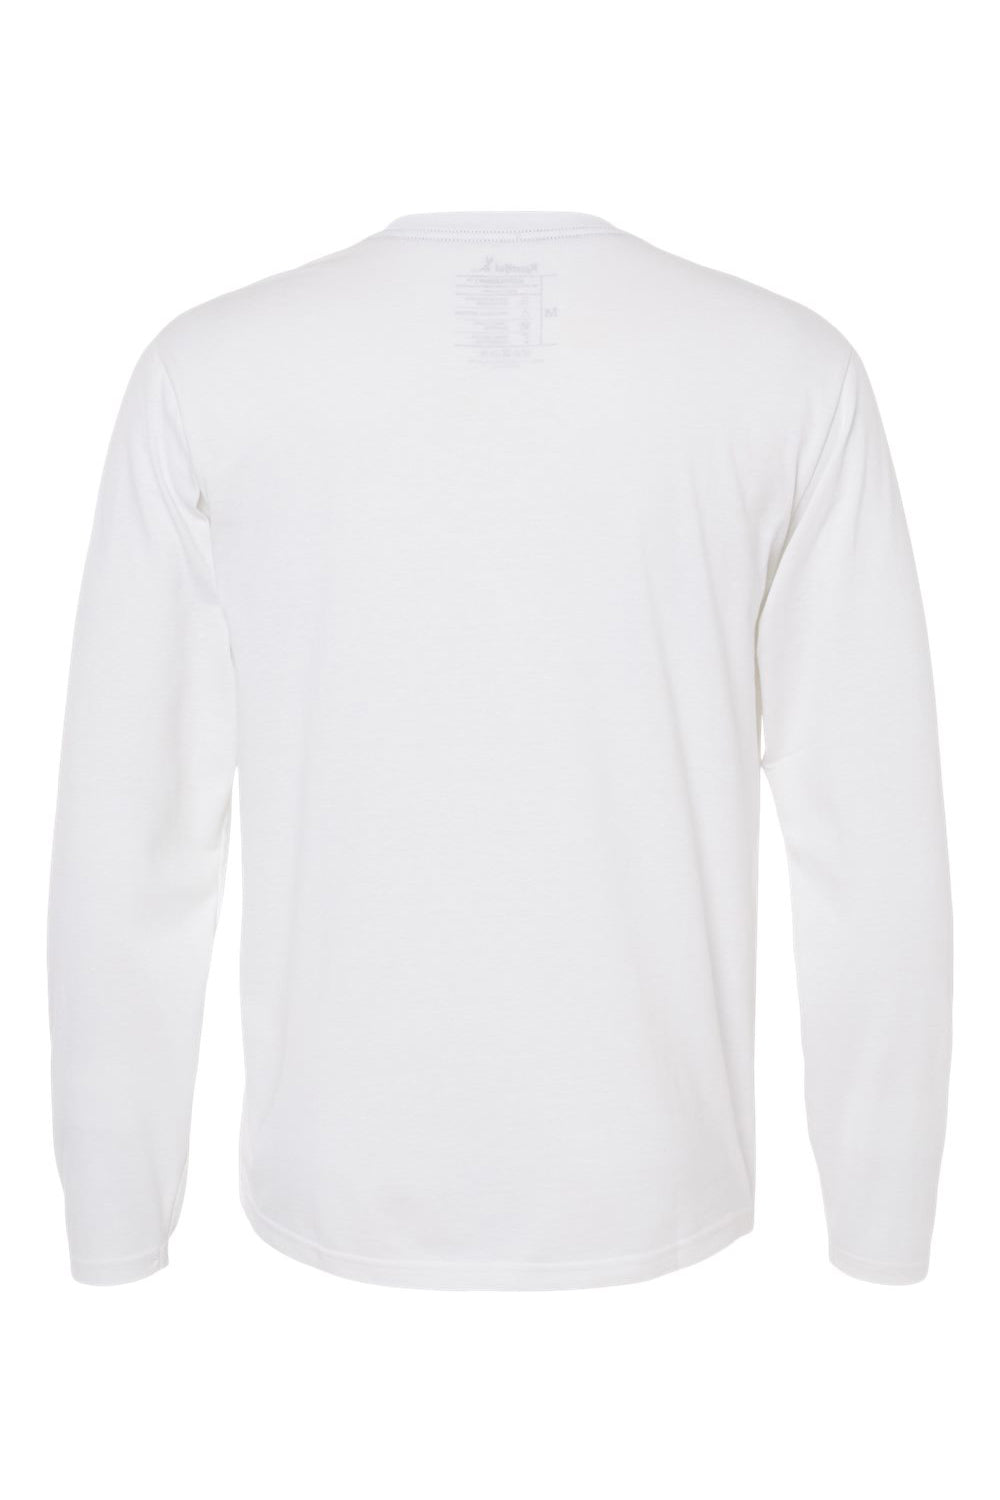 Kastlfel 2016 Mens RecycledSoft Long Sleeve Crewneck T-Shirt White Flat Back